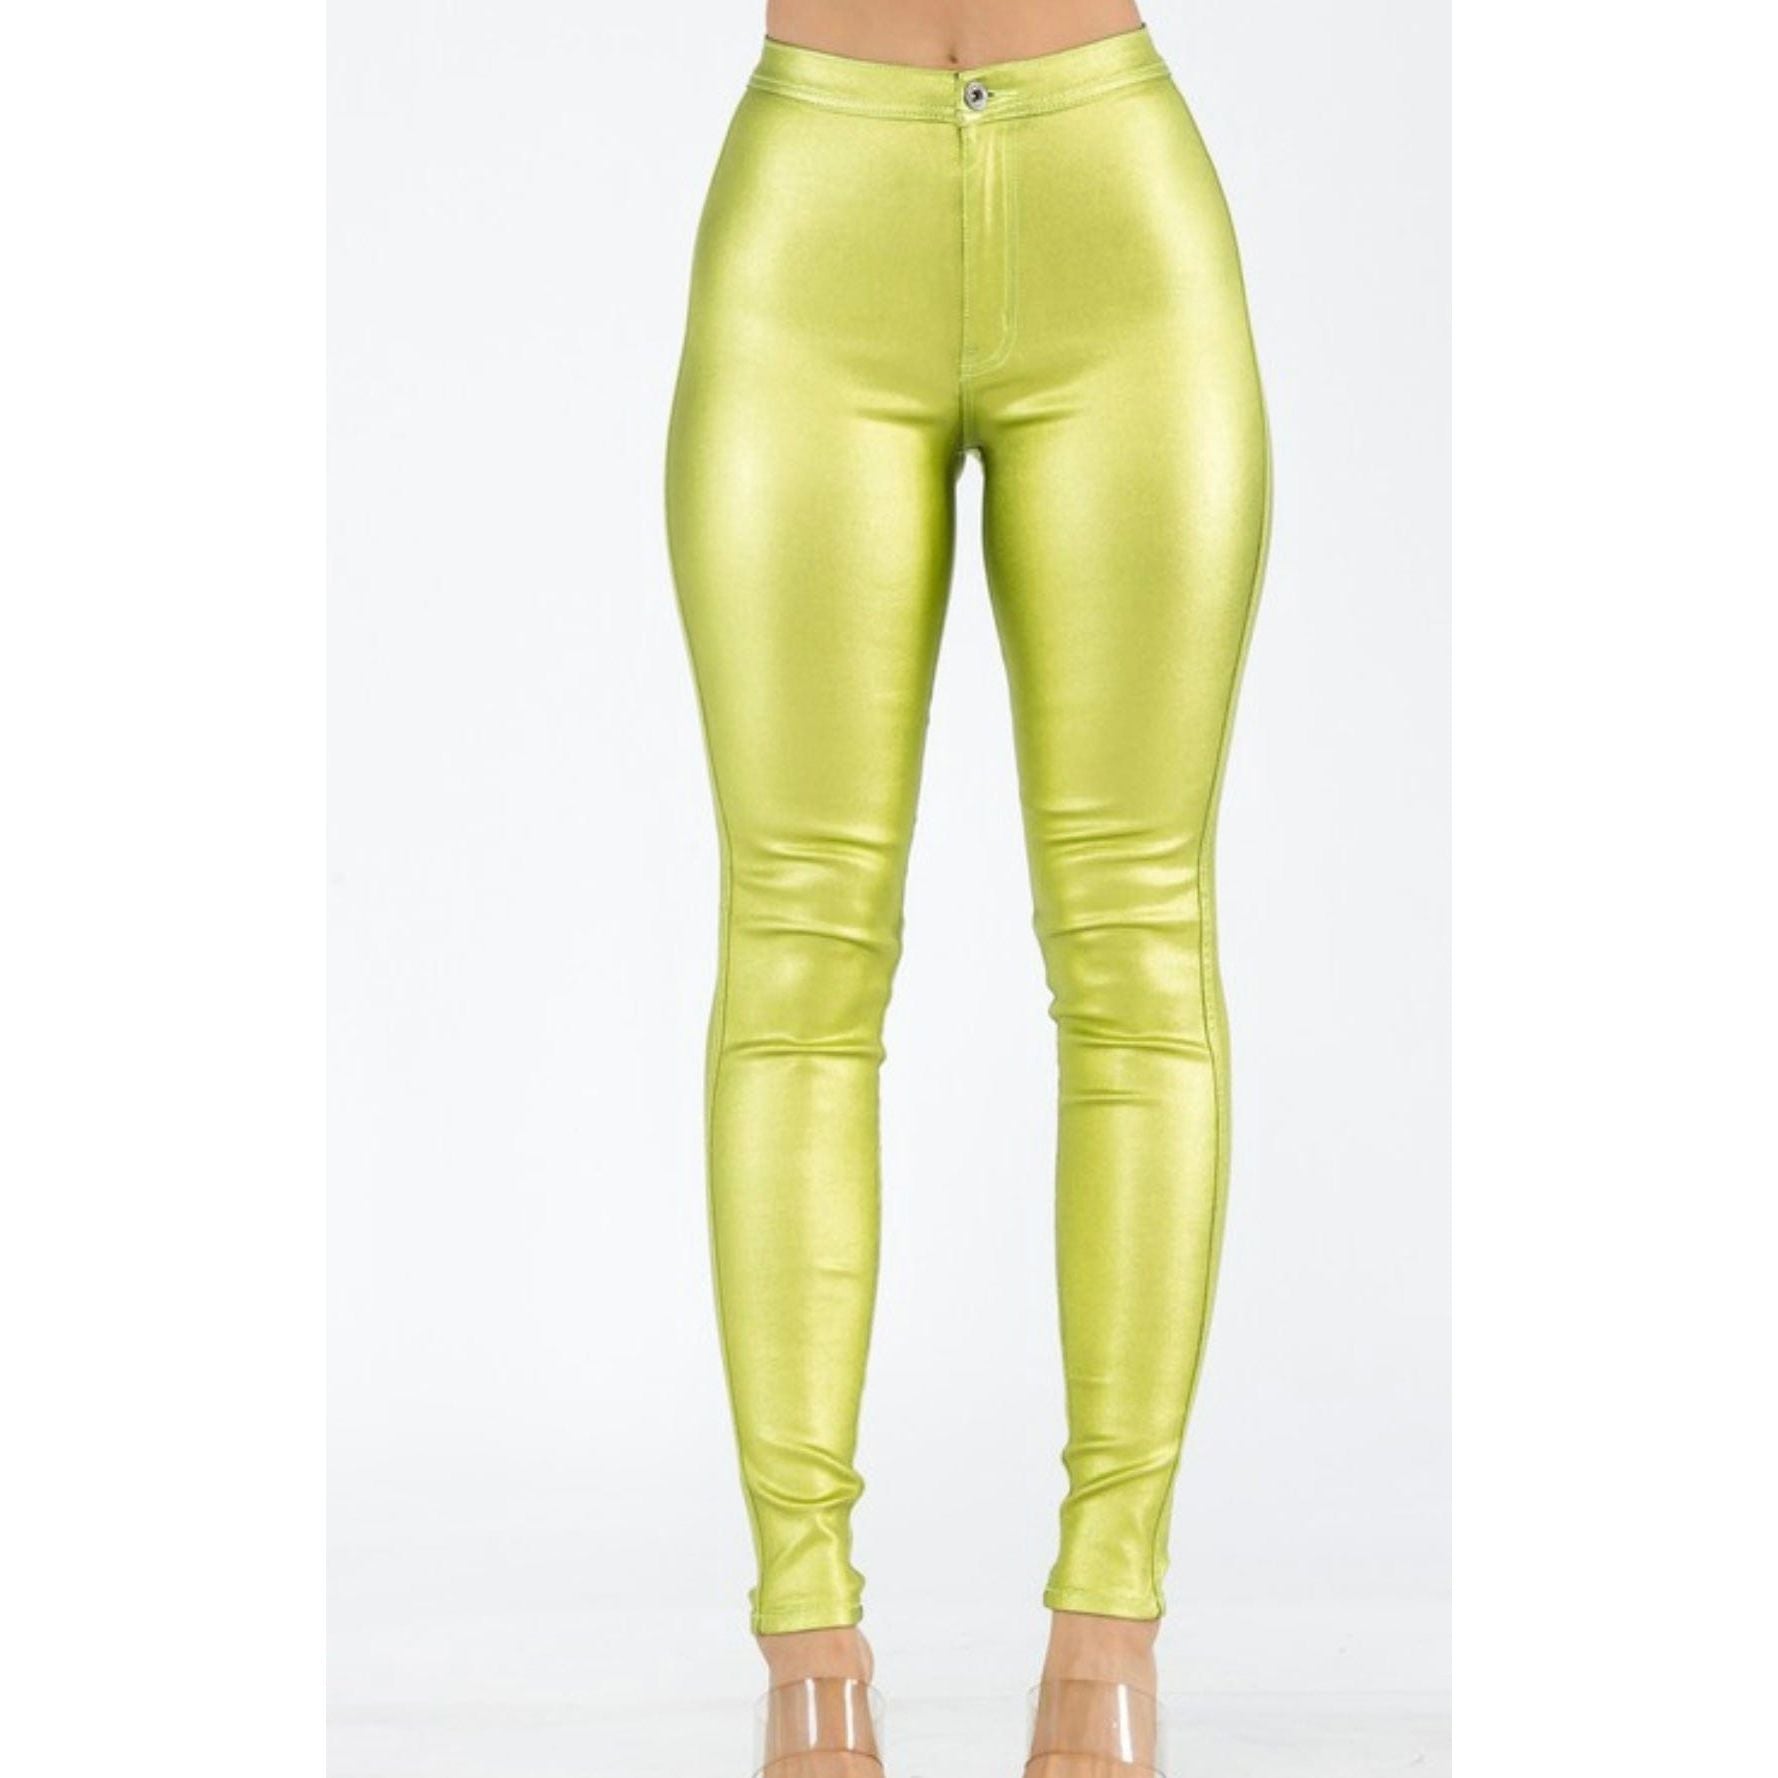 Lime Iridescent Pants